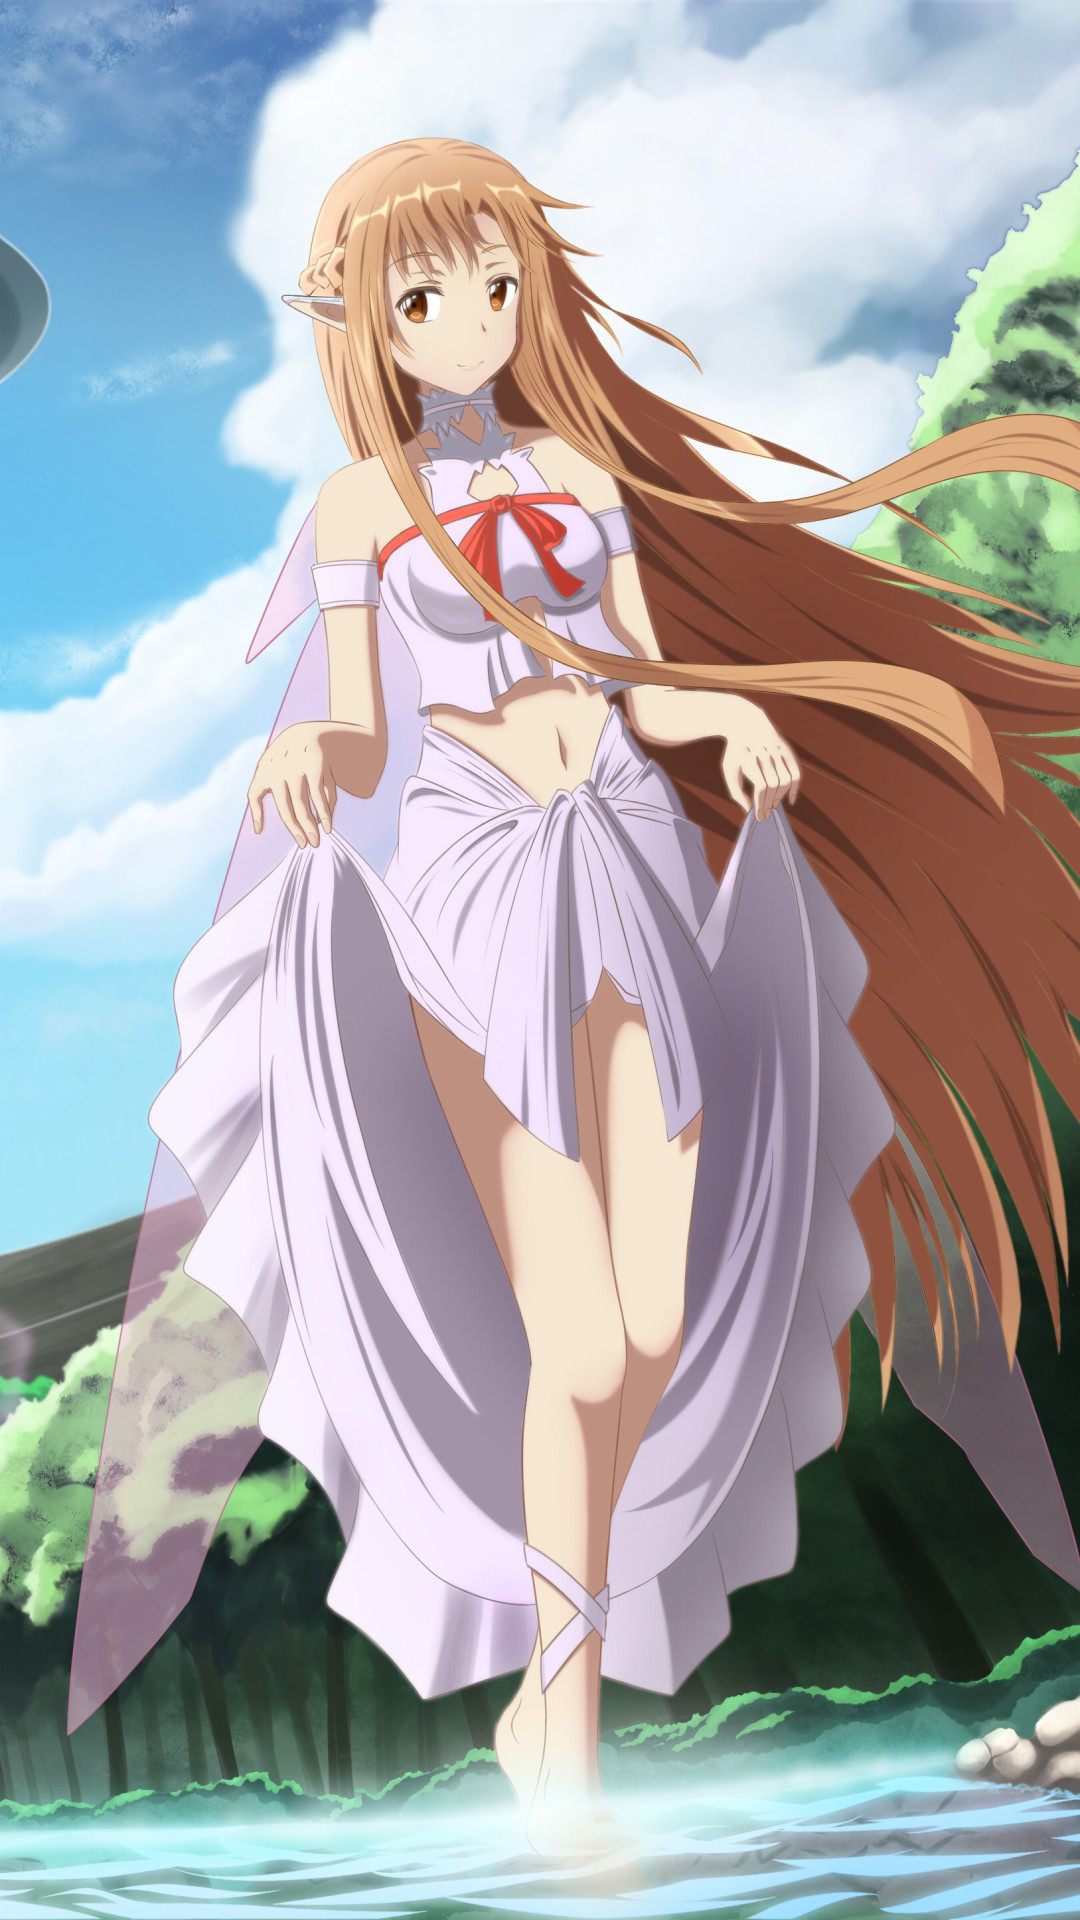 1080x1920 Anime Sword Art Online Asuna Yuuki. Wallpaper 626950